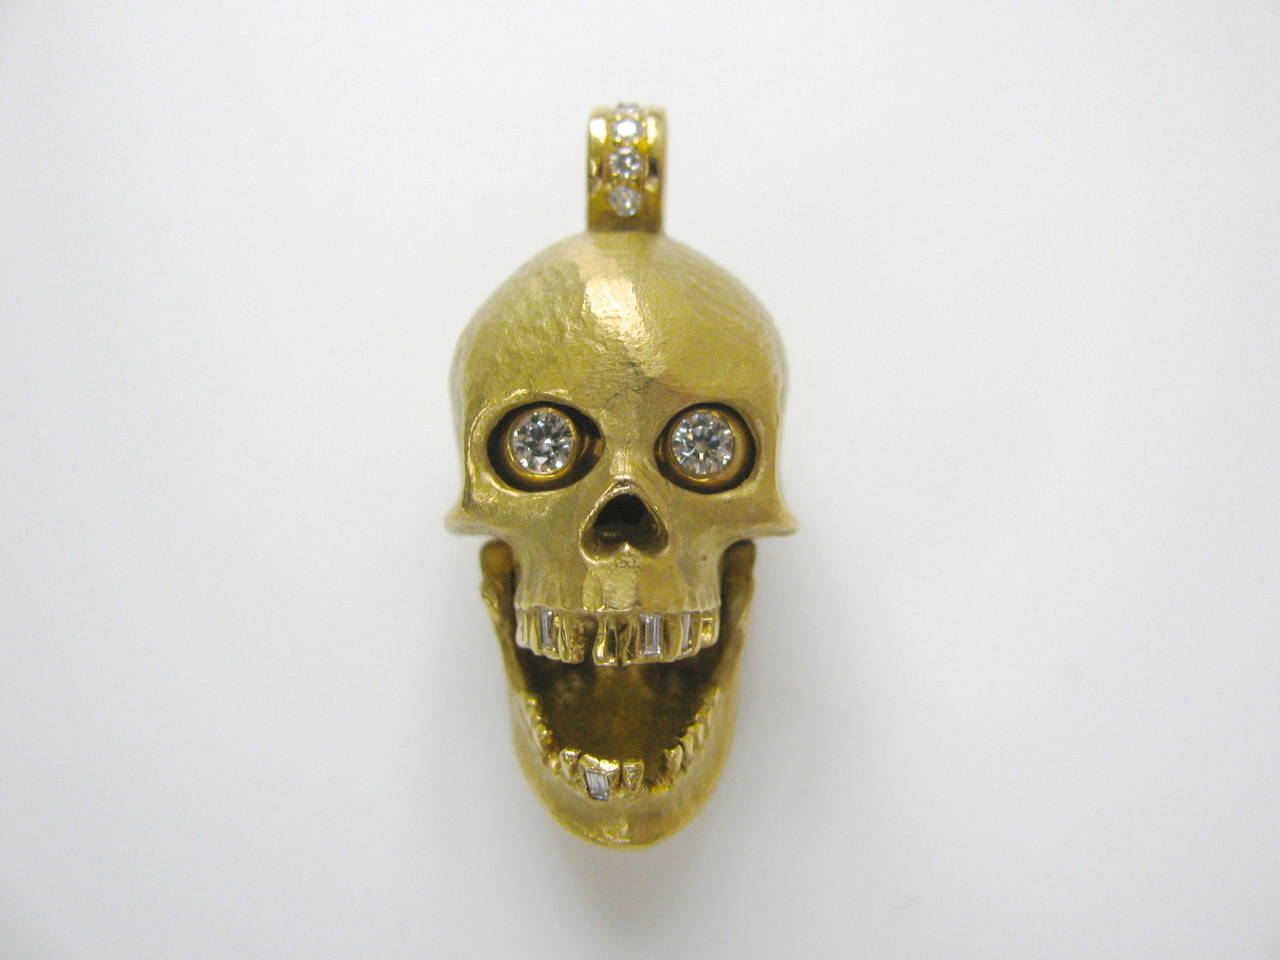 Modern An Articulated Gold and Diamond Skull Pendant